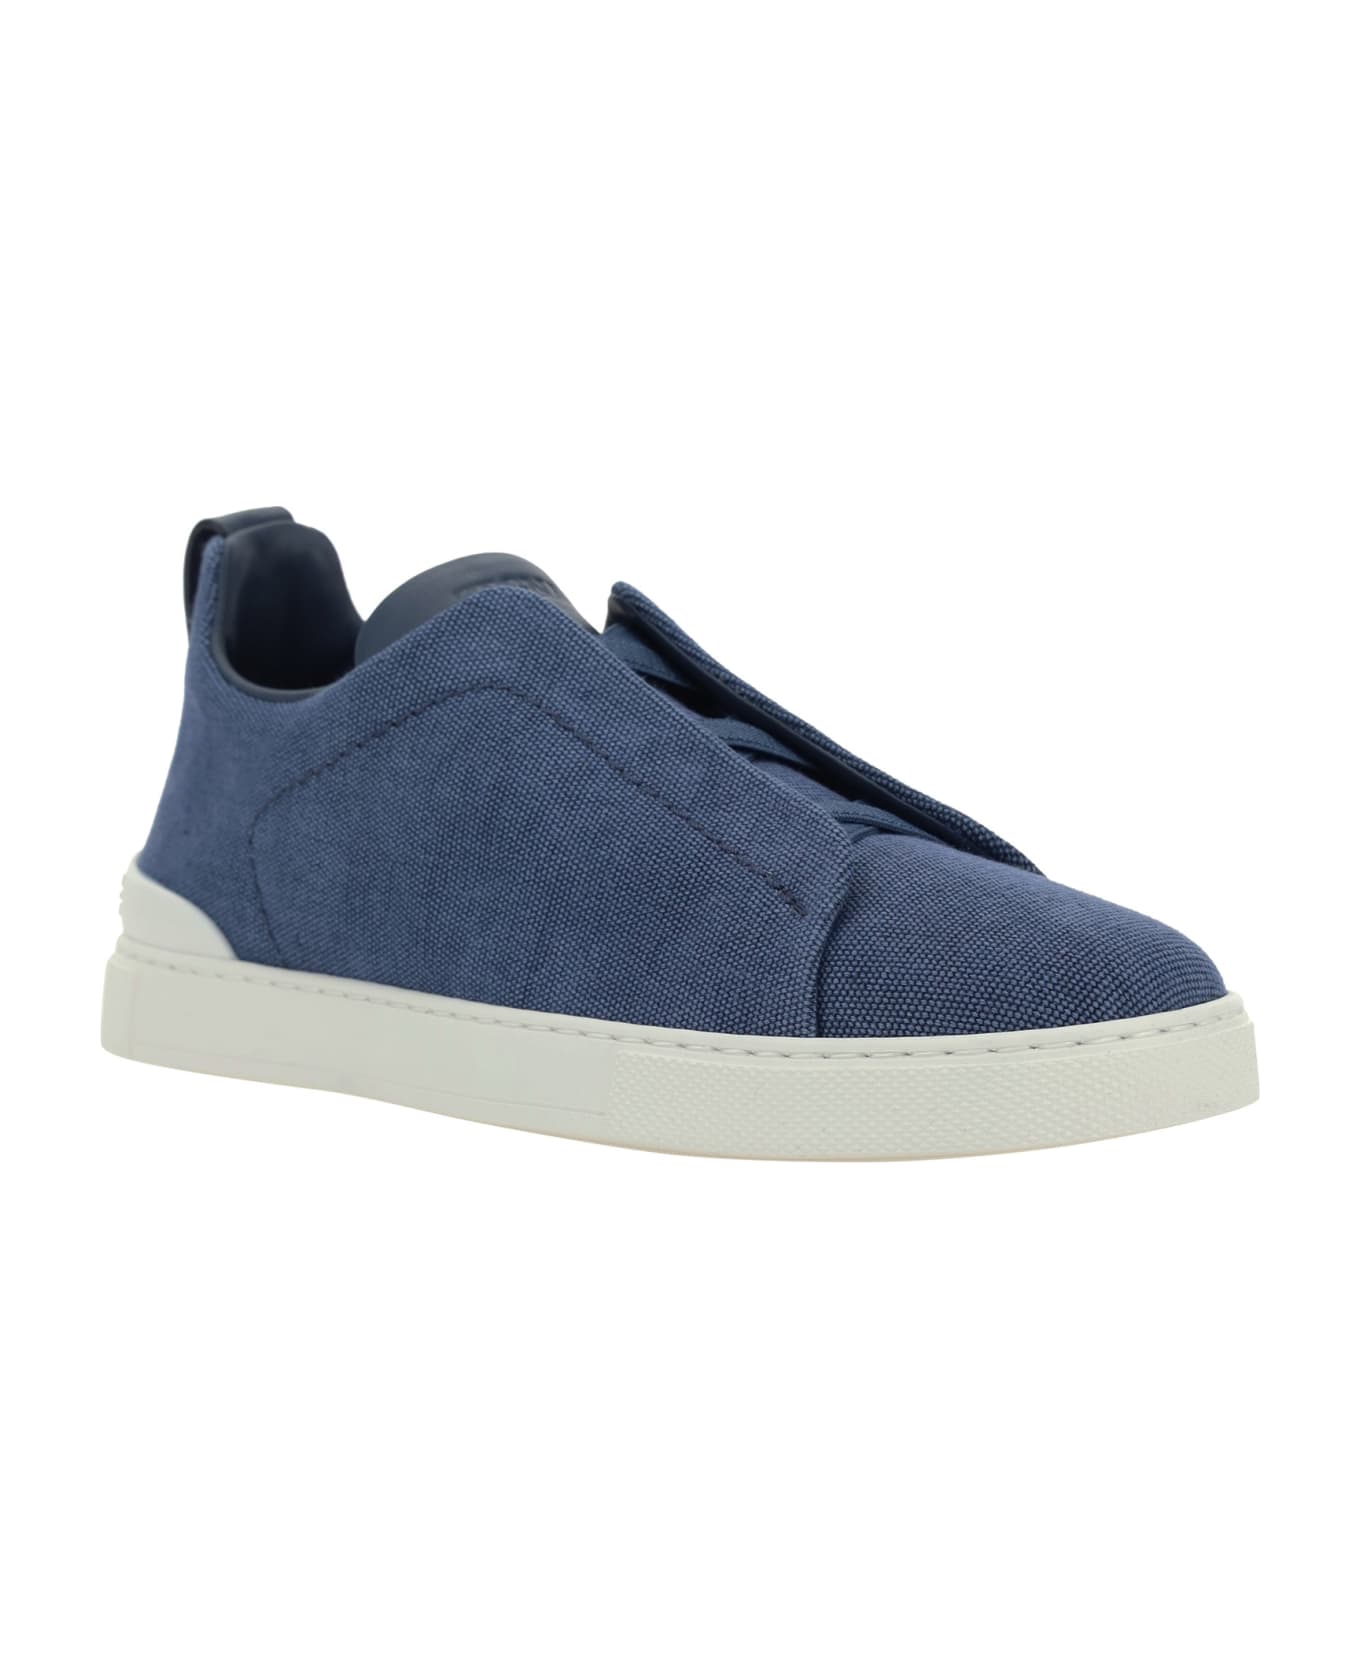 Zegna Low Top Sneakers - Blue